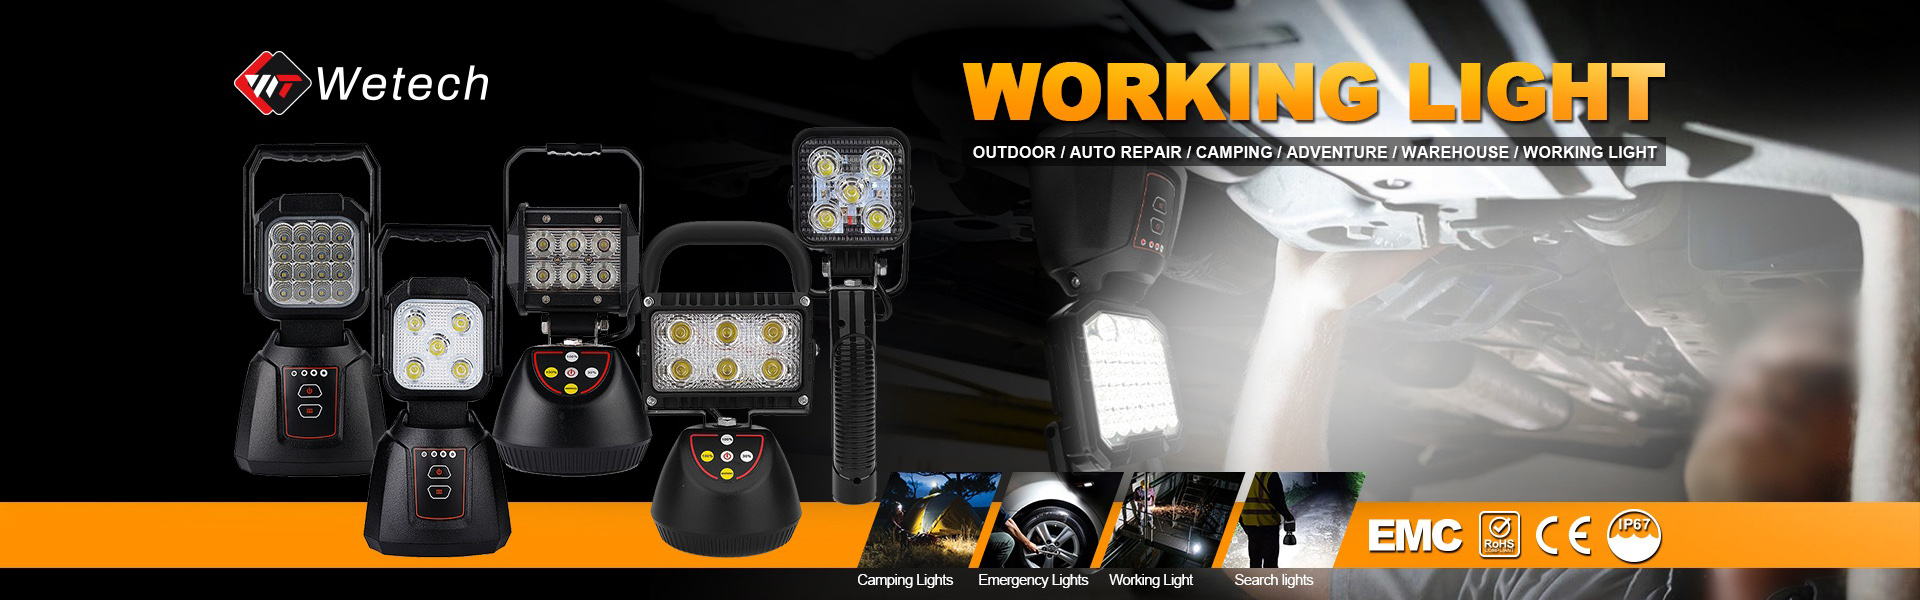 Projektor logo GOBO, LED Work Light, LED Forklift Light,Wetech Electronic Technology Limited